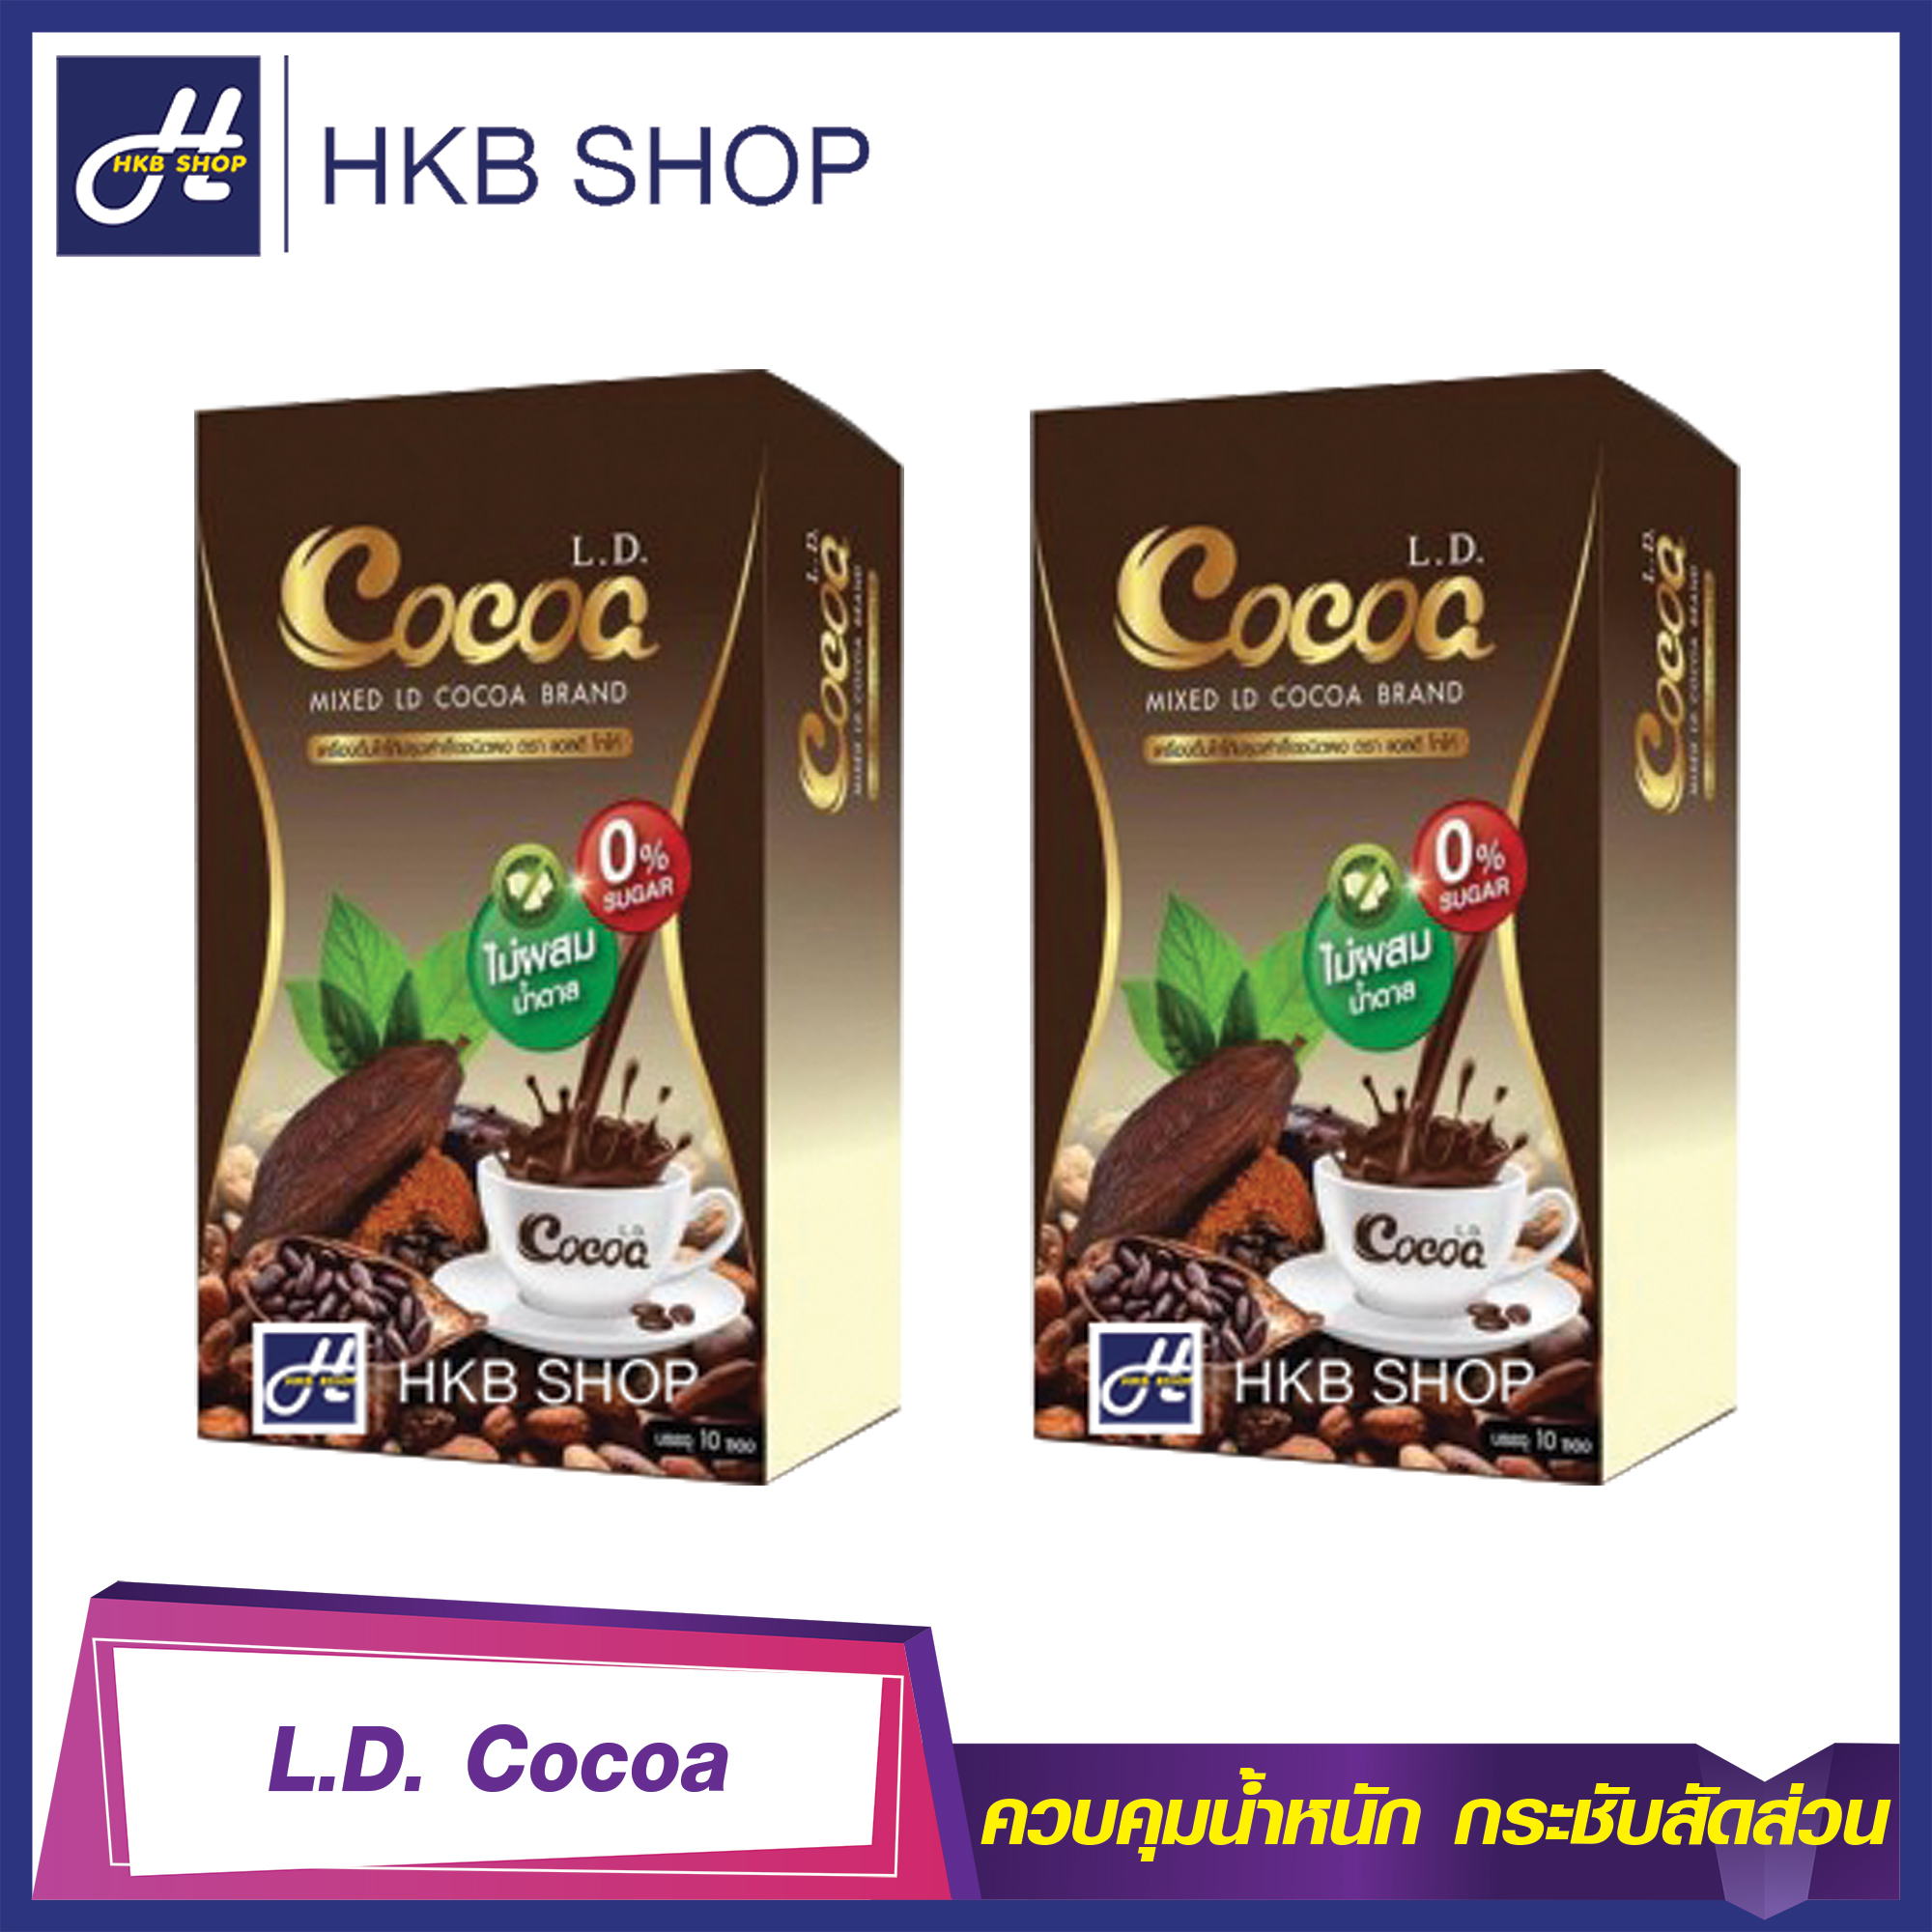 ⚡️2กล่อง⚡️ L.D. Cocoa แอลดี โกโก้ กาแฟปรุงสำเร็จชนิดผงผสมโกโก้ By HKB SHOP